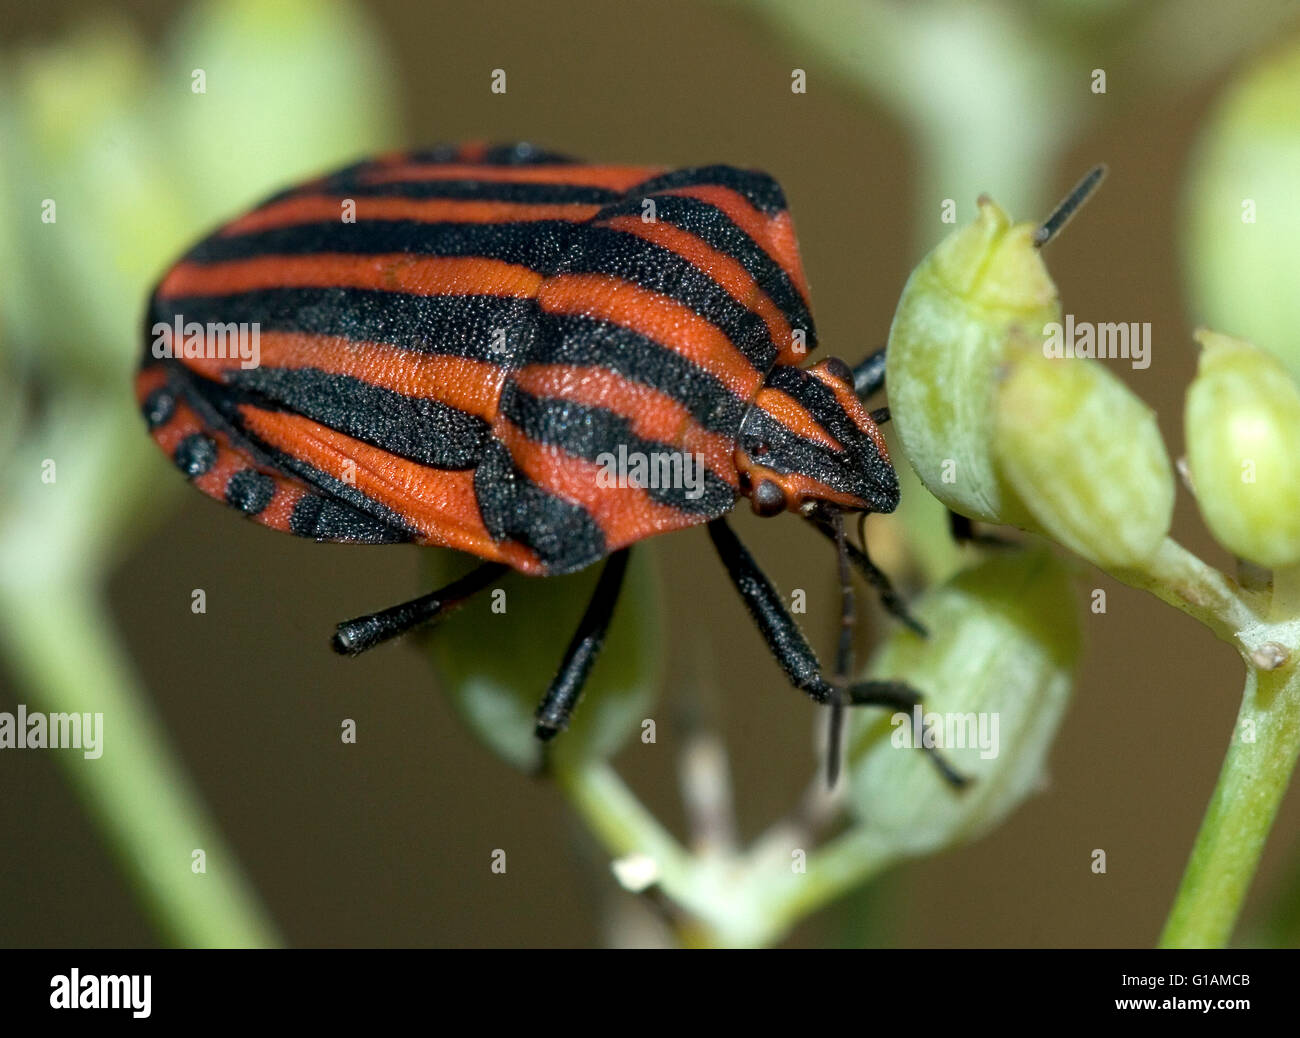 Striped bedbug, scientific name Graphosoma lineatum. Stock Photo